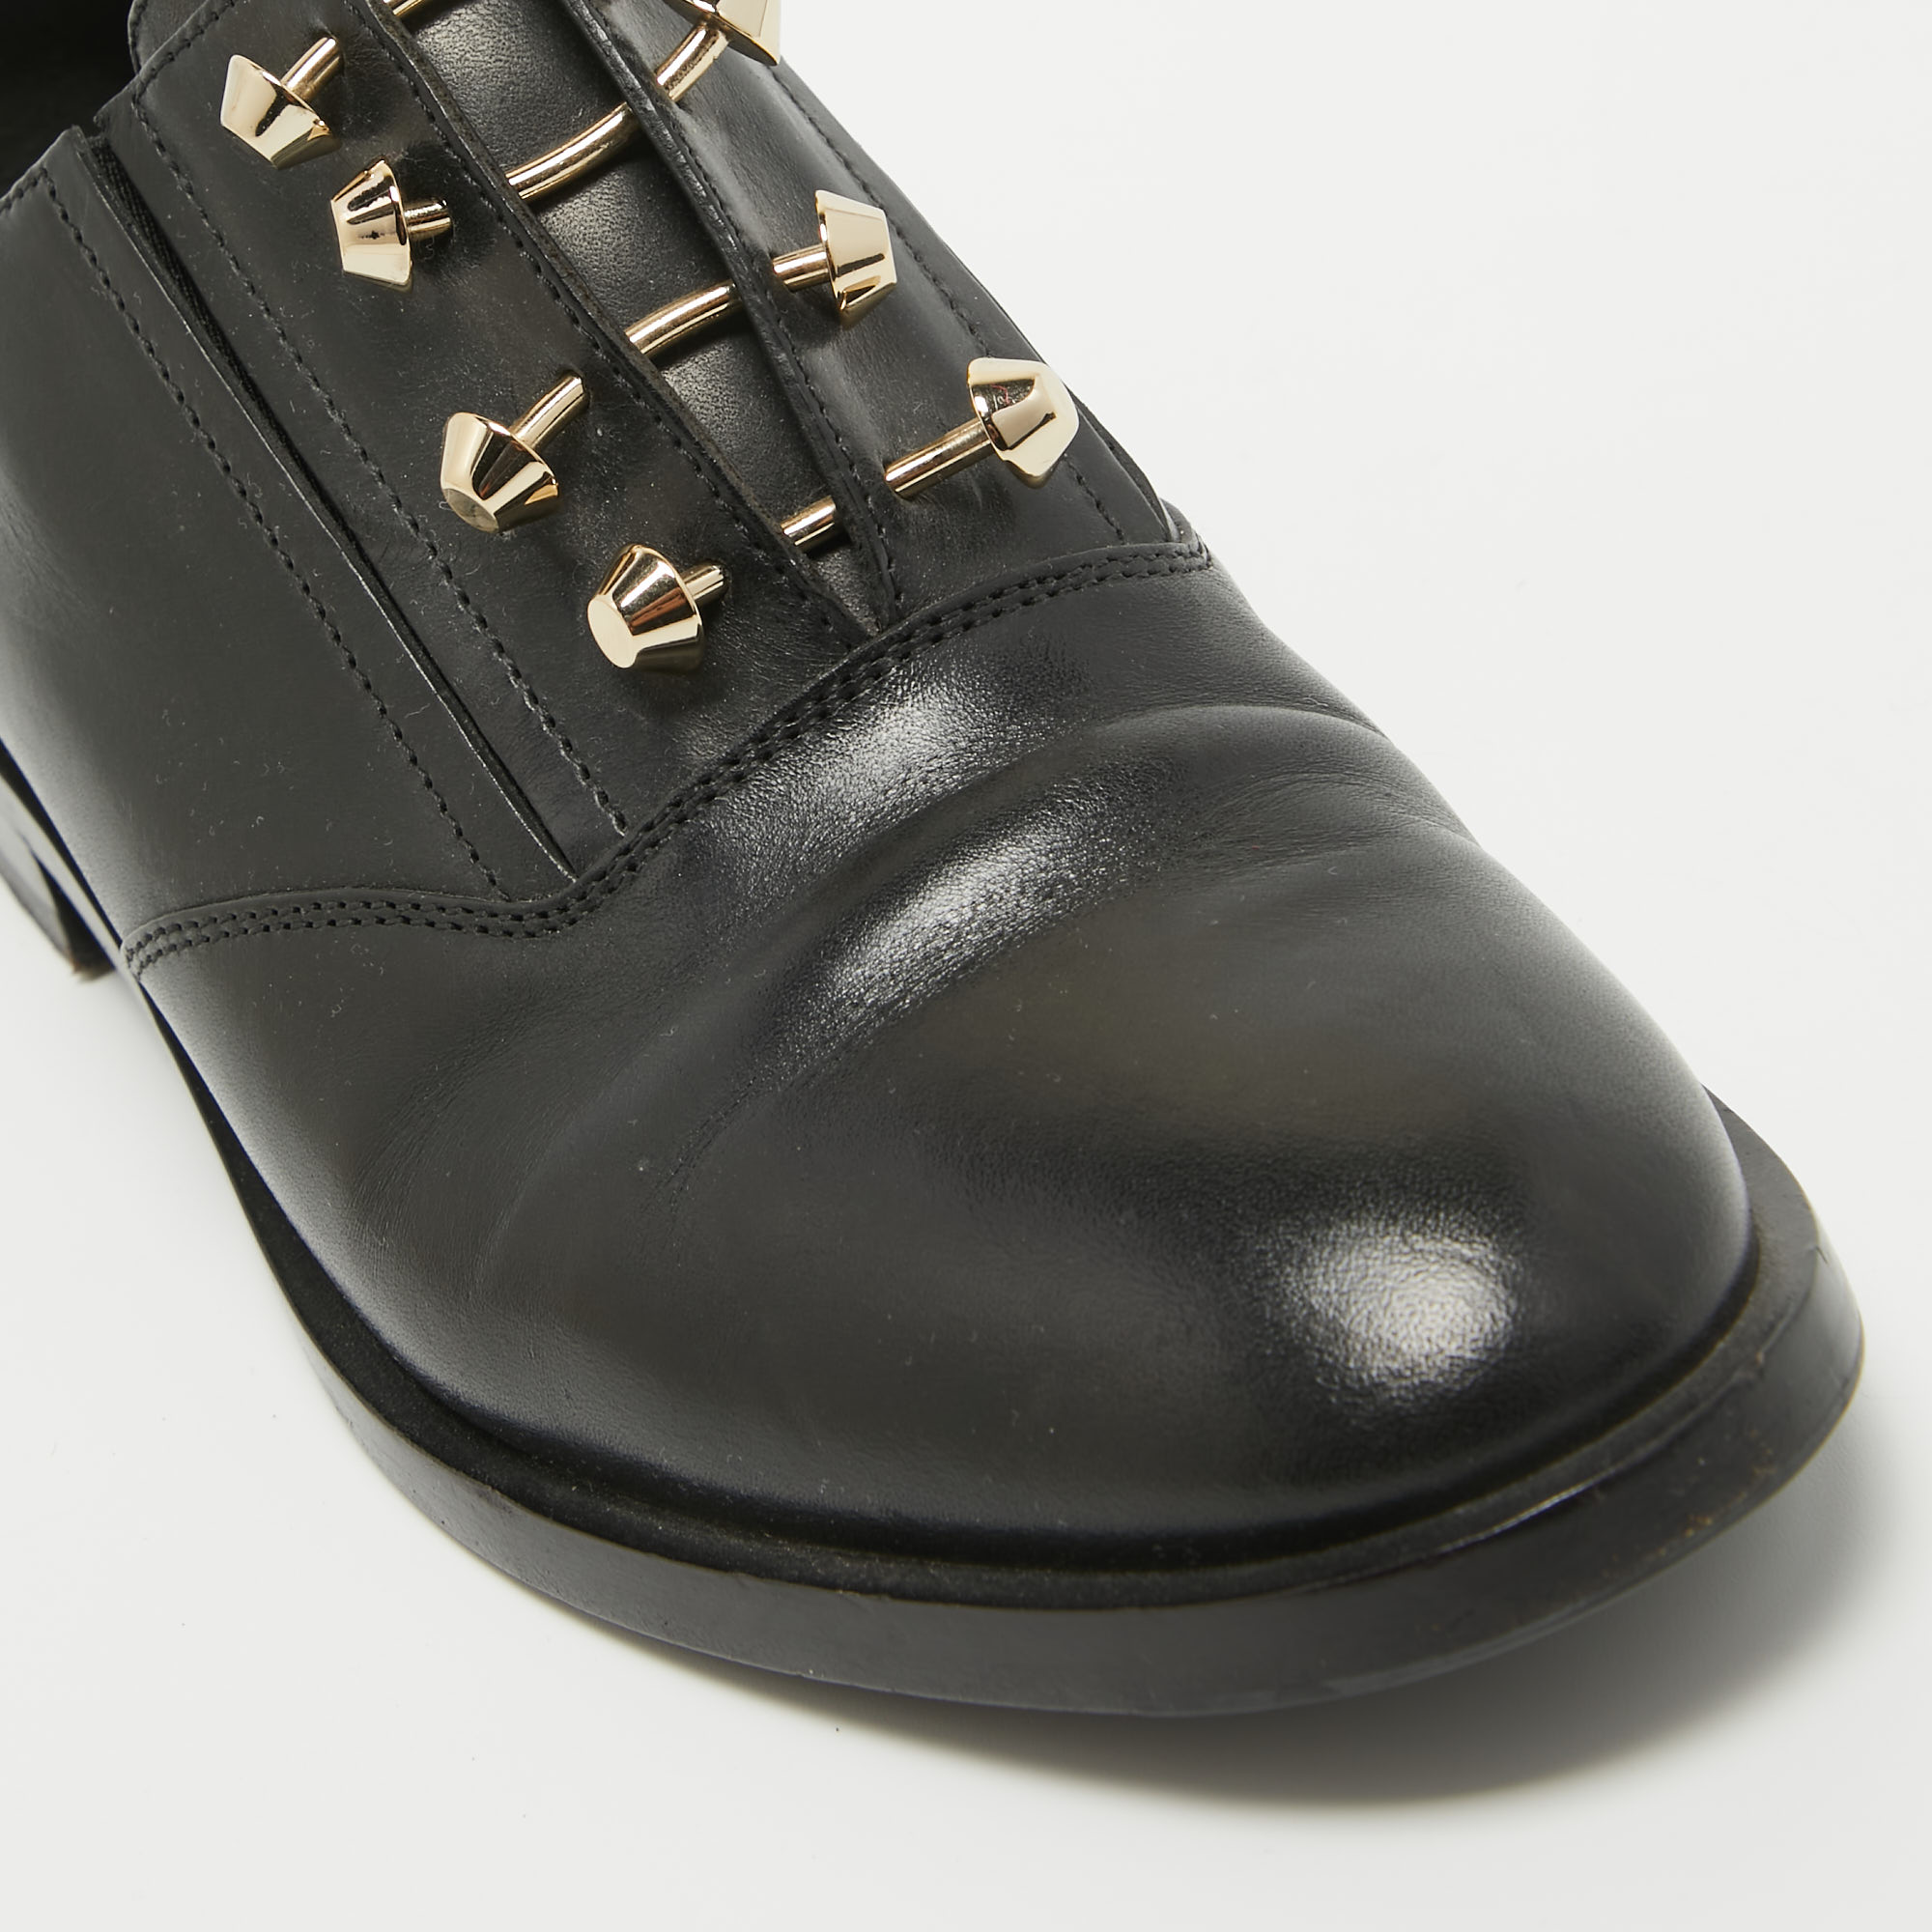 Balenciaga Black Leather Slip On Oxfords Size 39.5